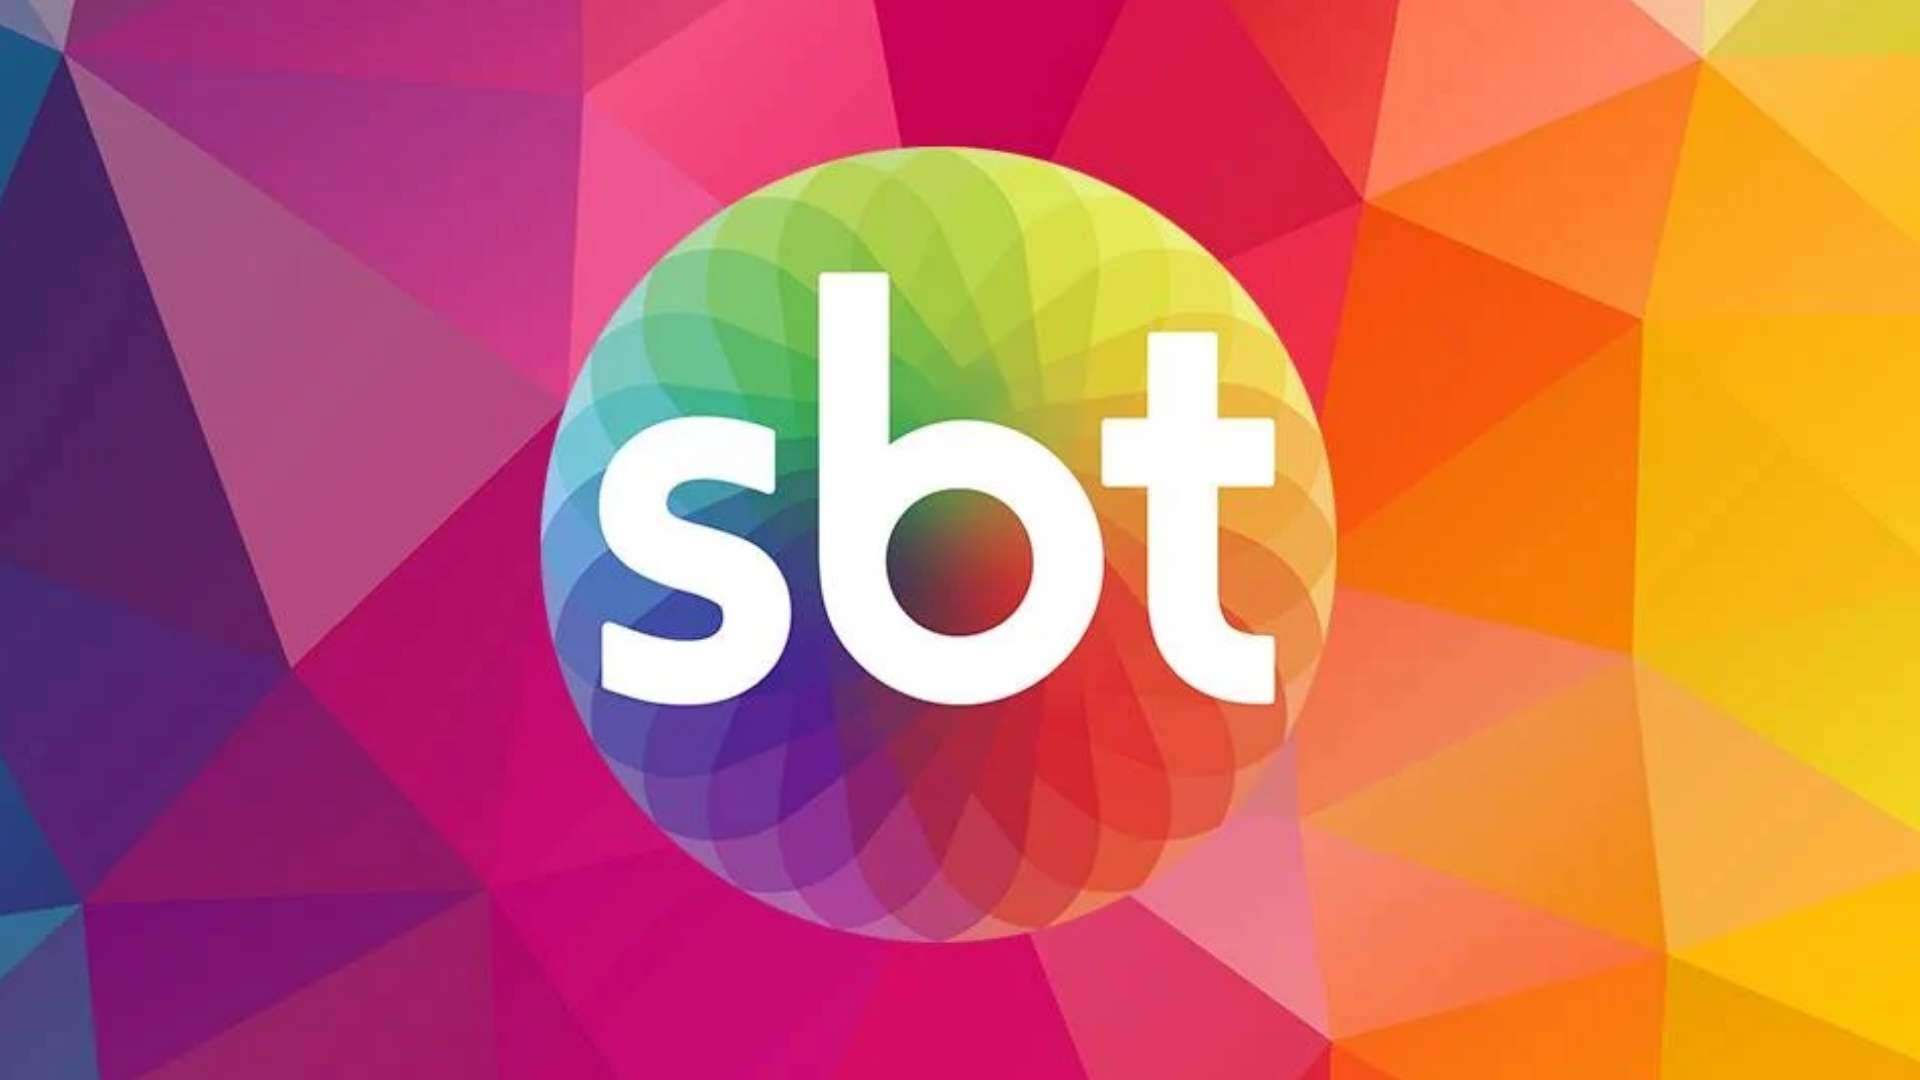 Guerra entre emissoras? SBT passa a perna na Record e contrata jornalistas para novo programa